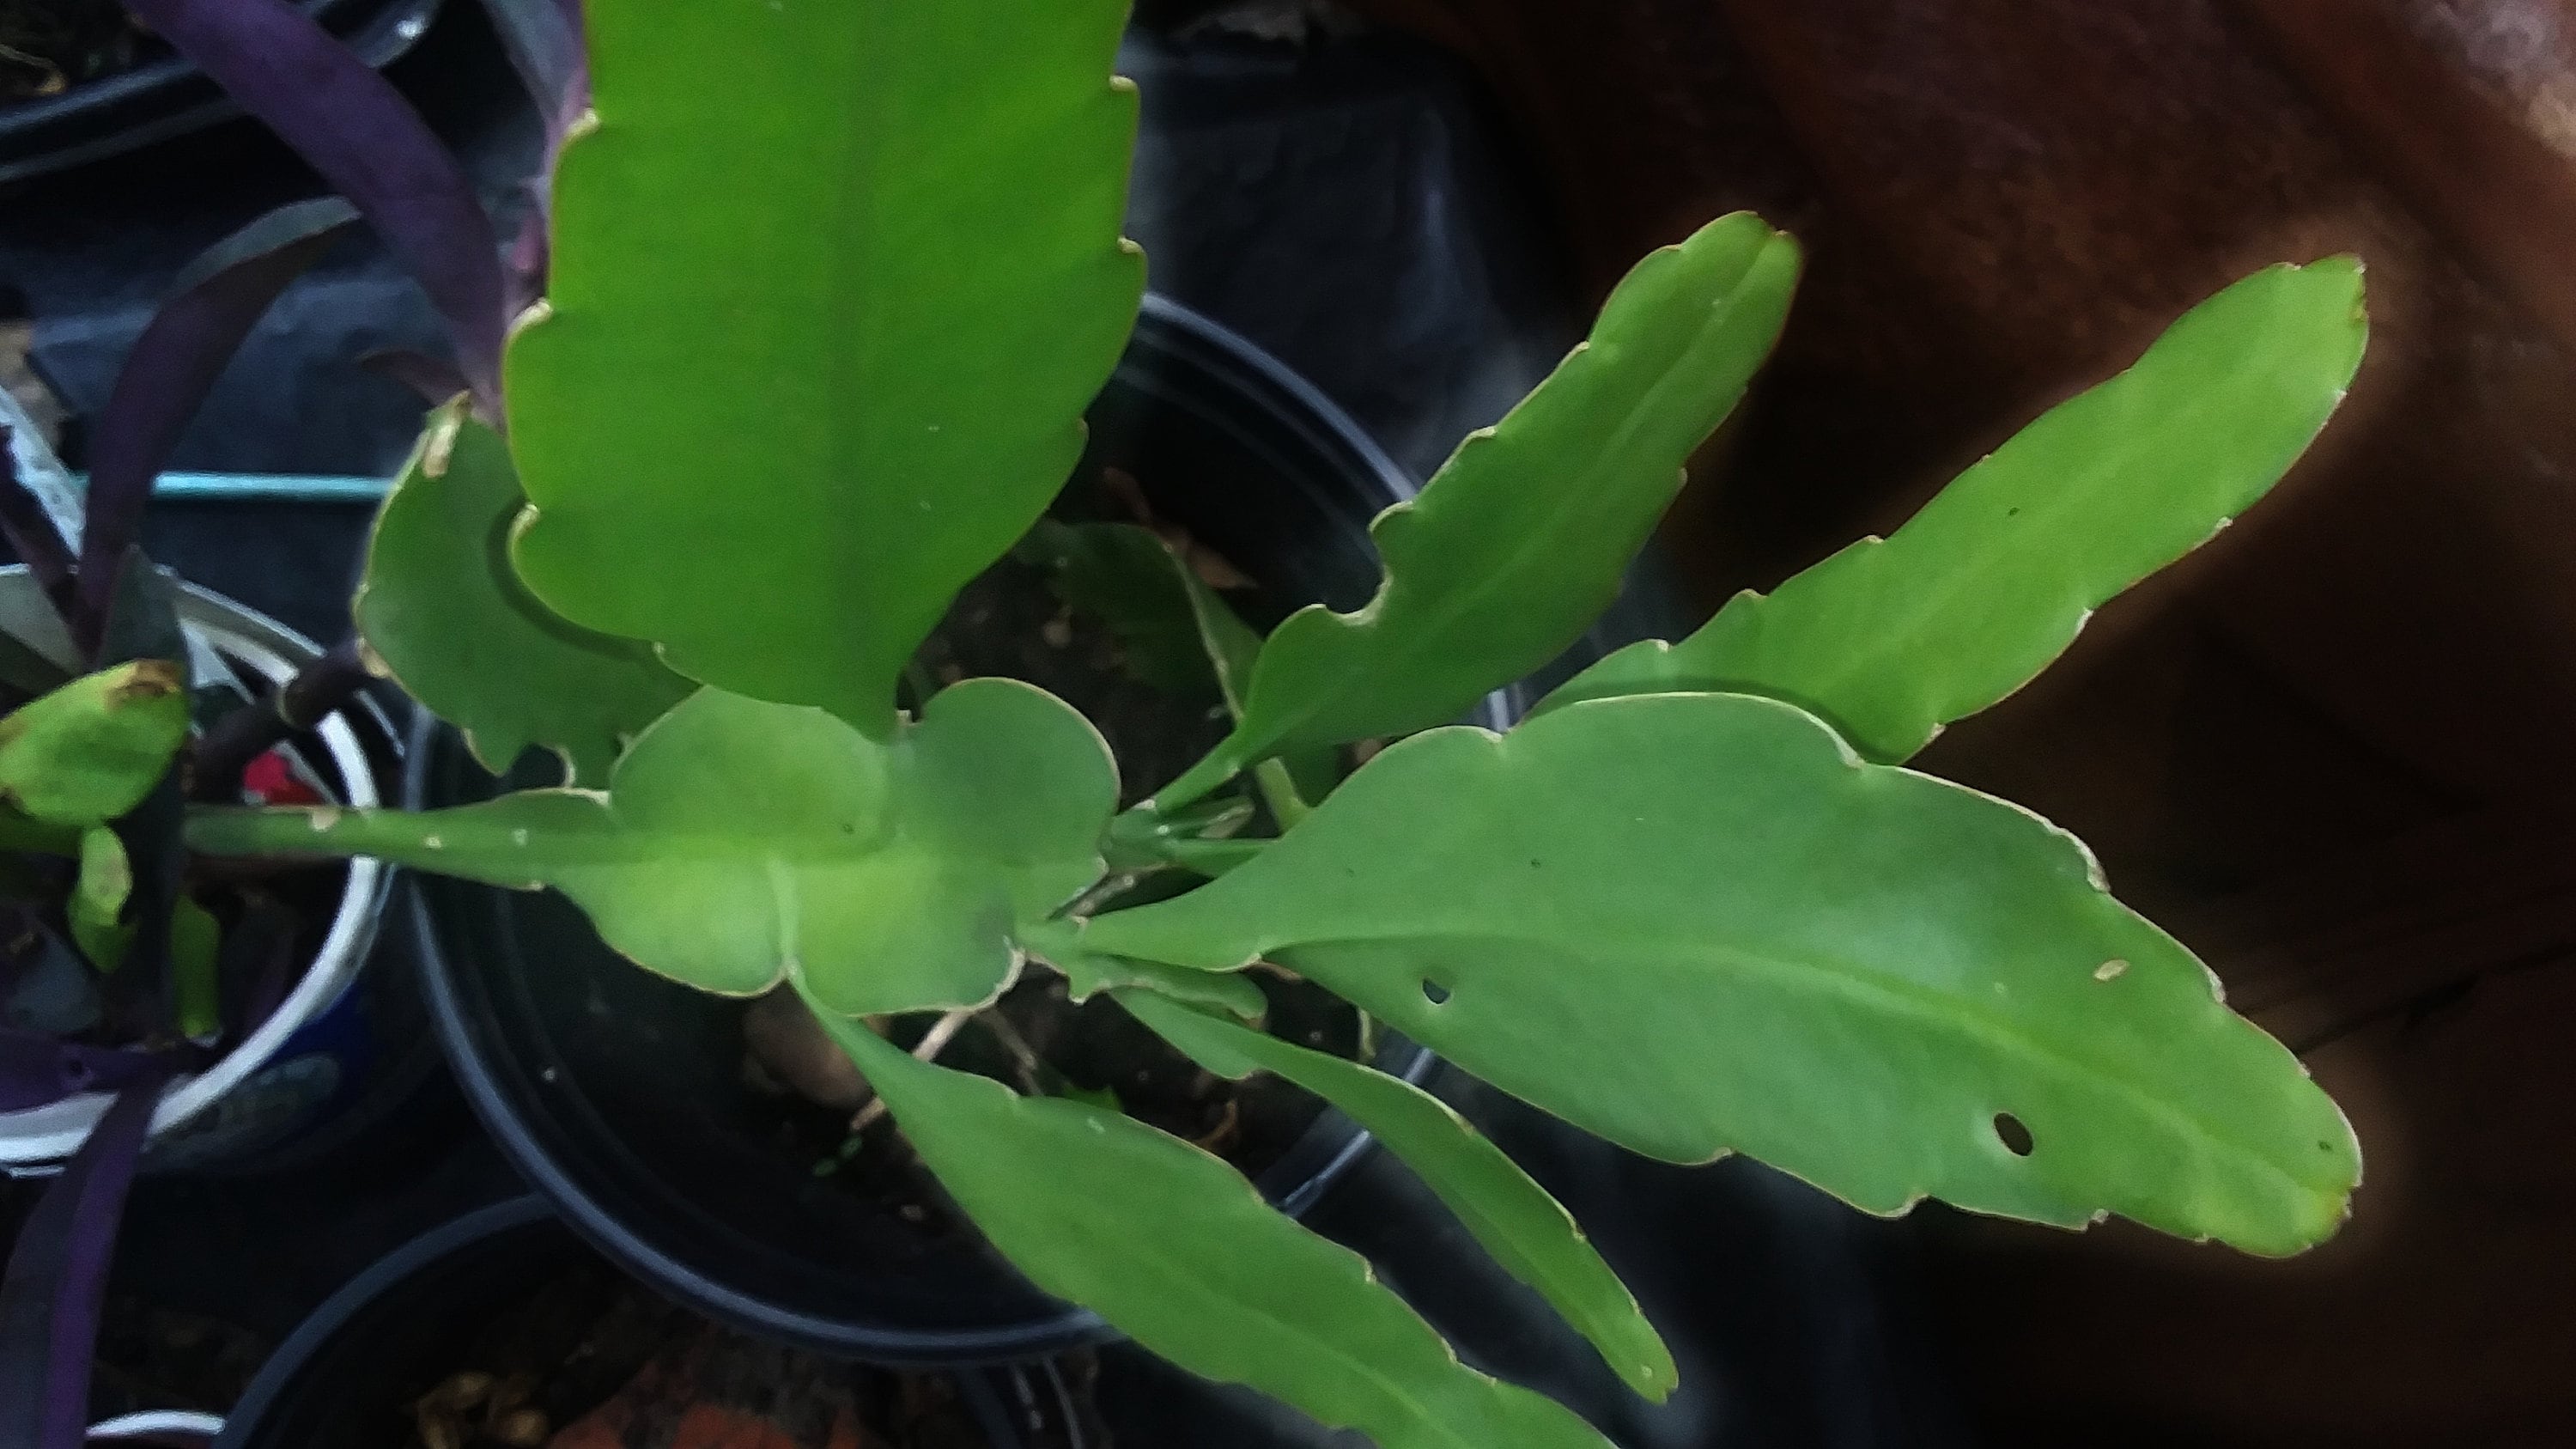 Chlorophytum comosum - Wikipedia